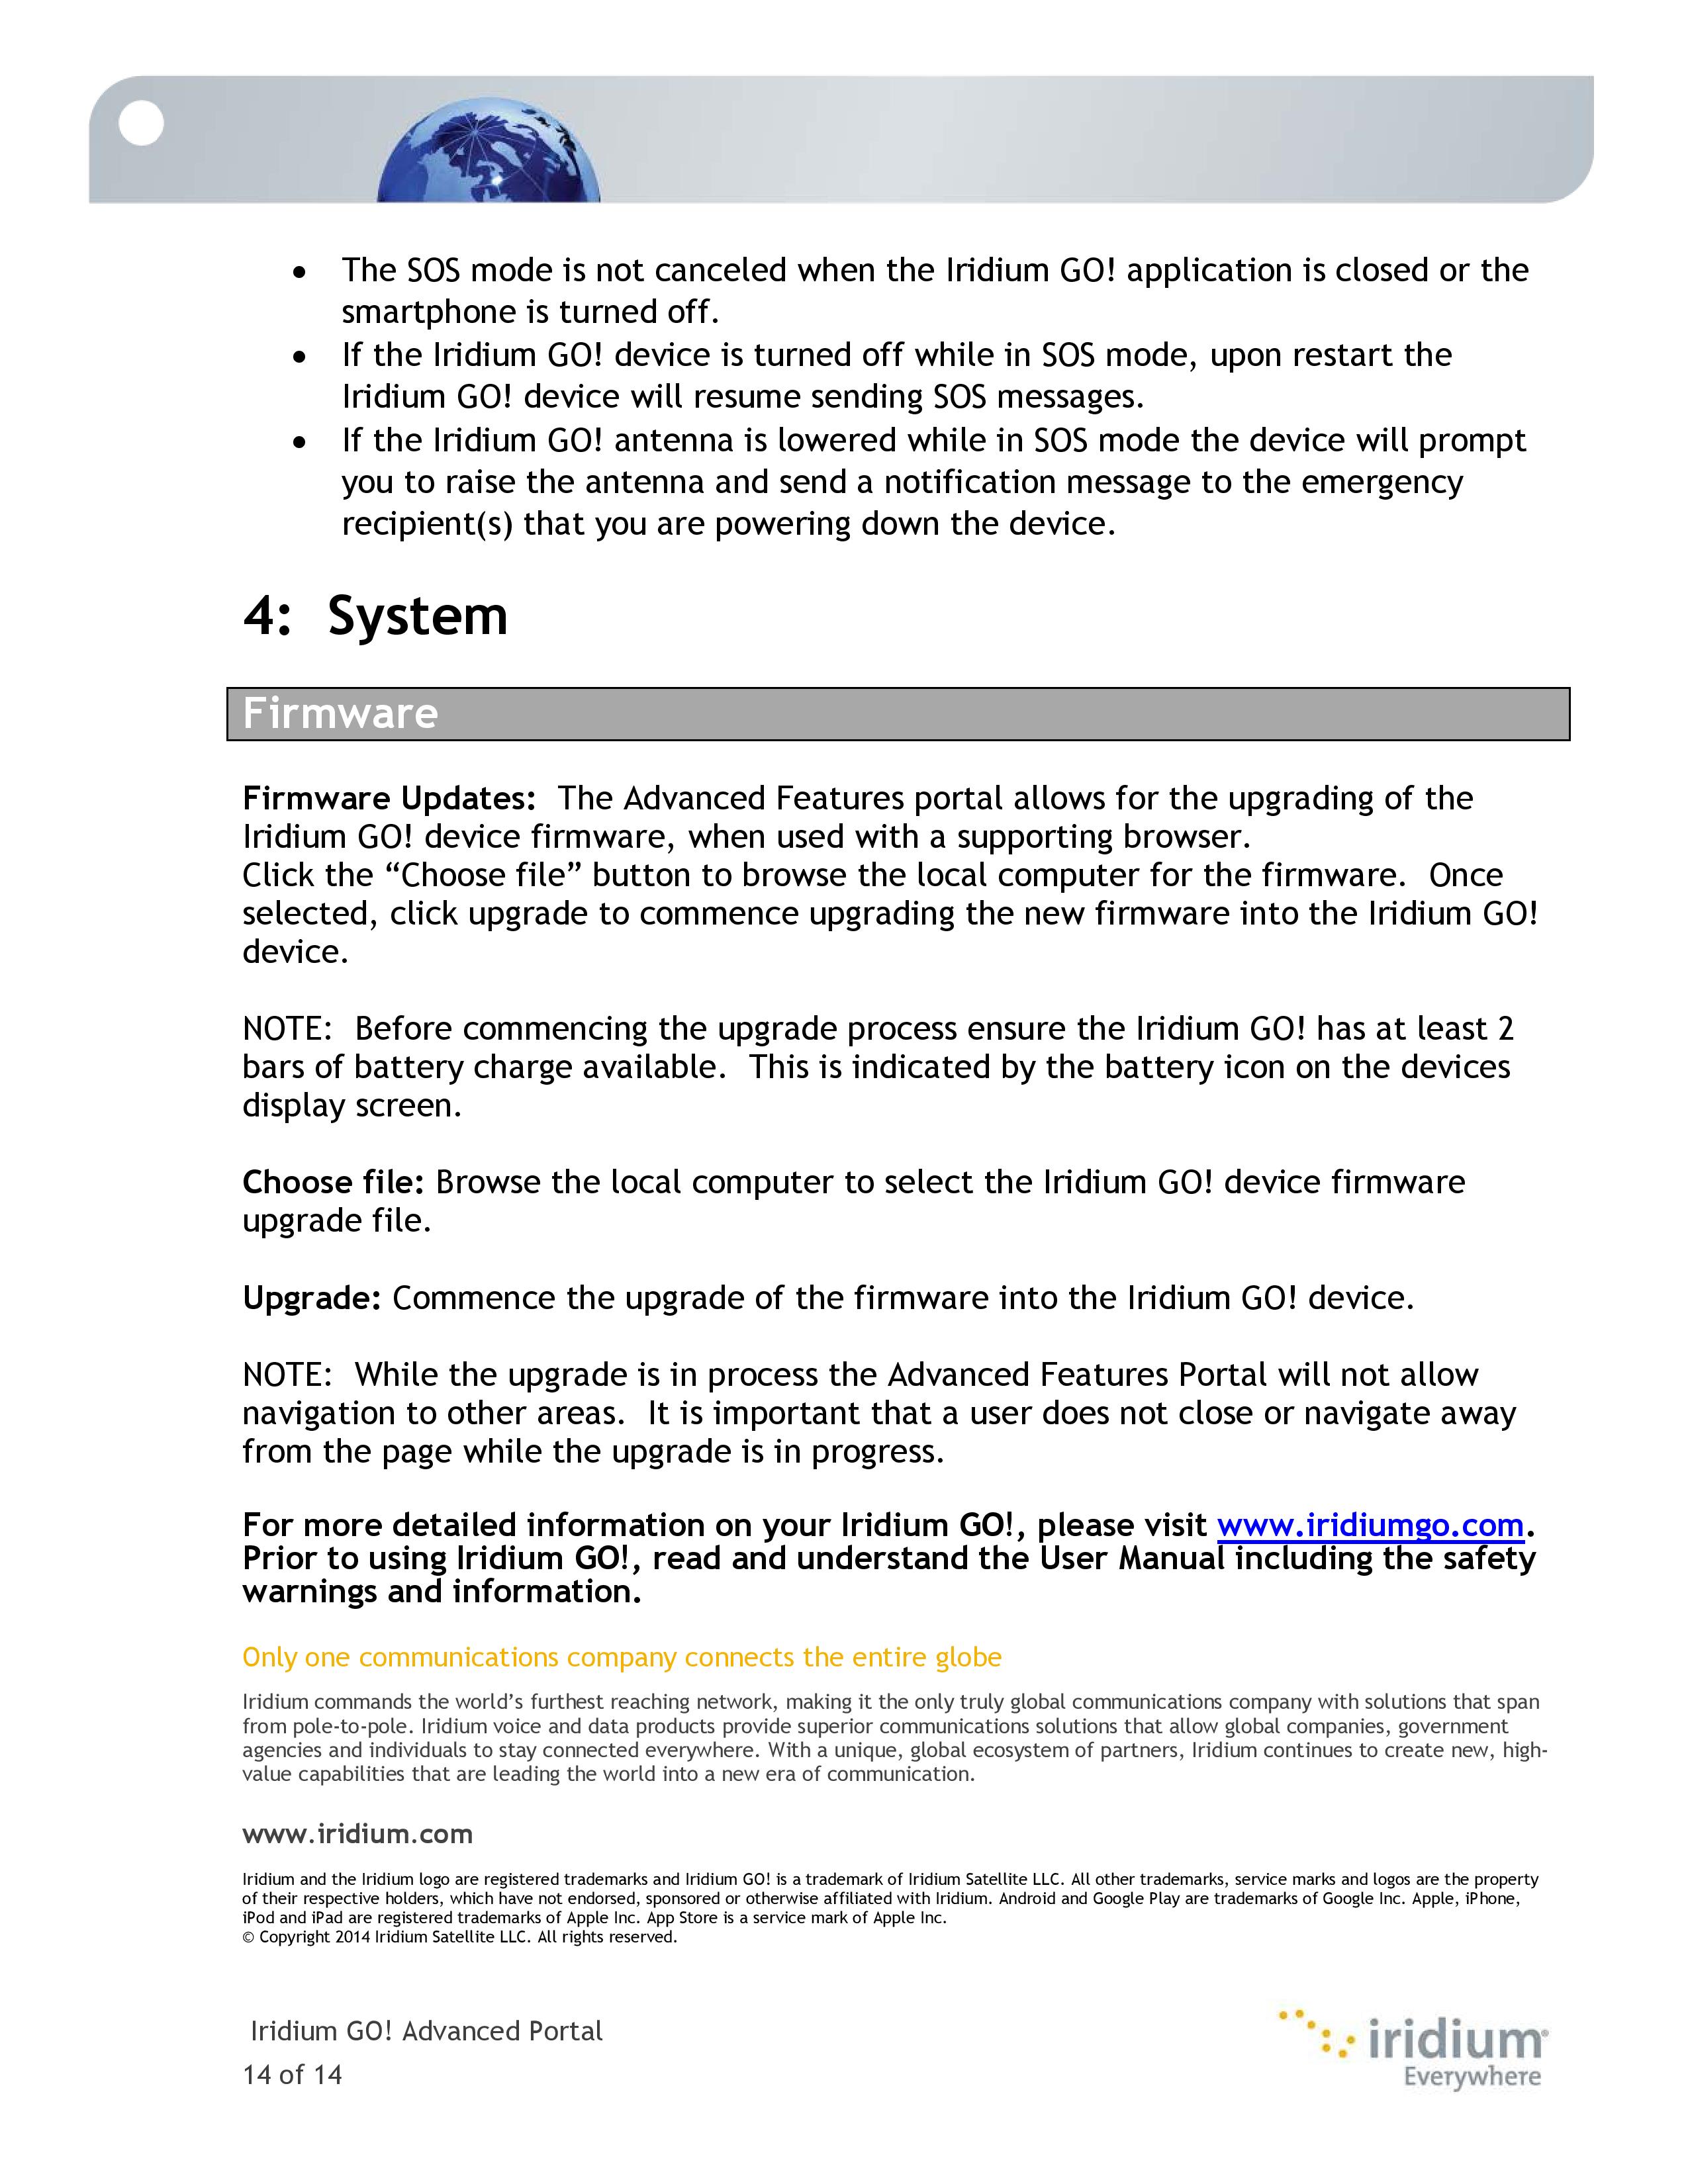 QSG_Iridium_GO__Advanced_Portal_Guide_2014_1_-page-014.jpg